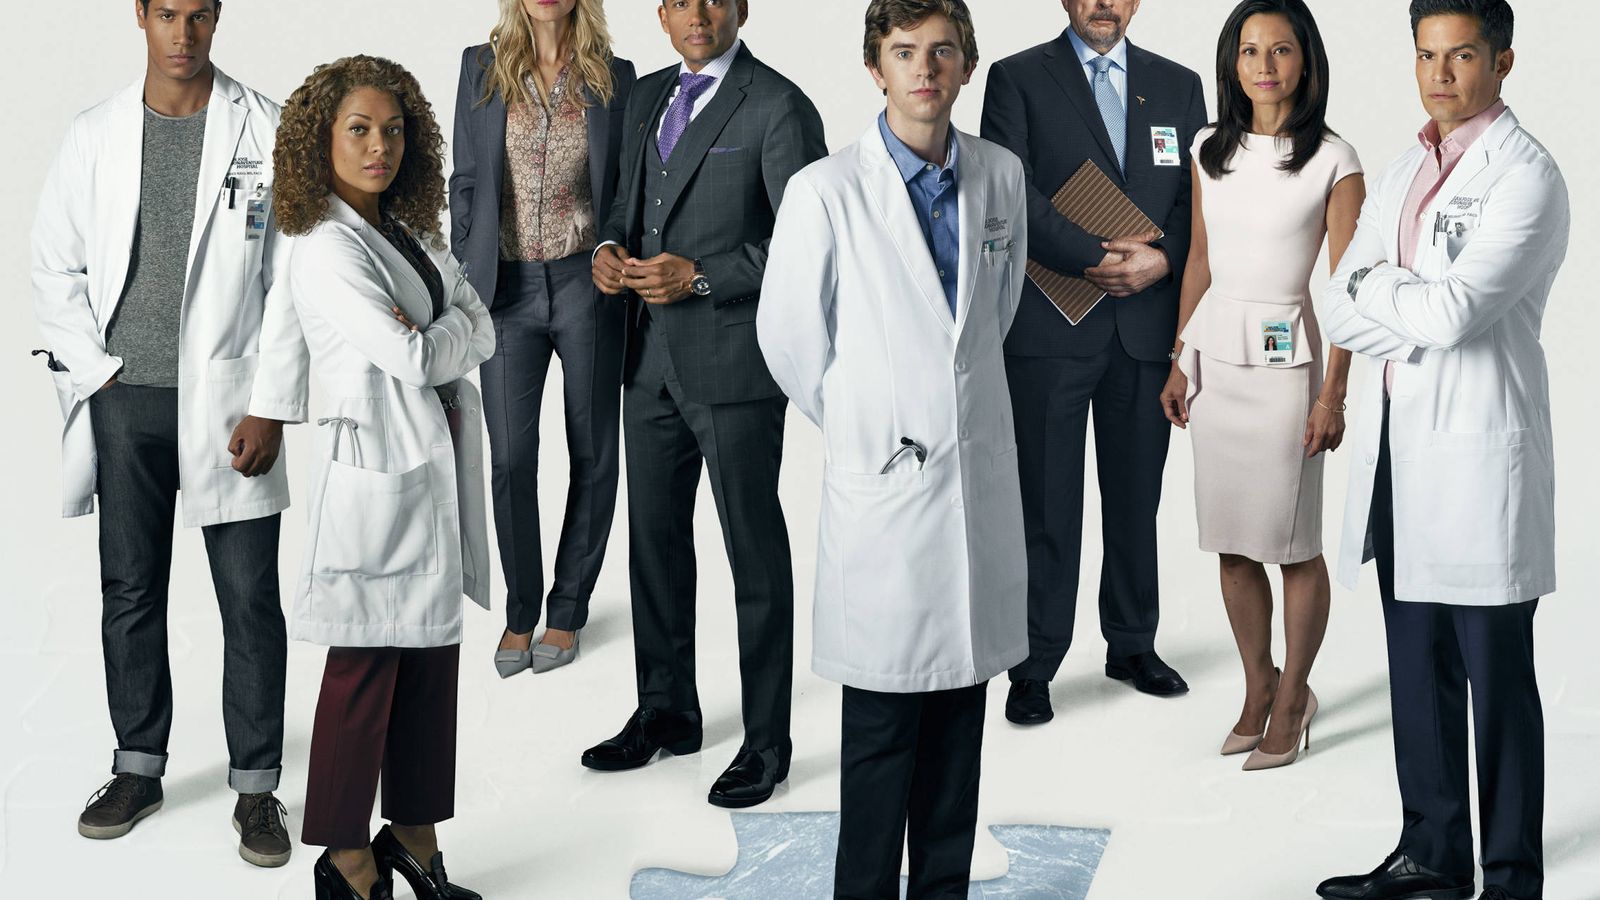 Foto: Imagen promocional de la serie médica 'The Good Doctor'. (Mediaset)